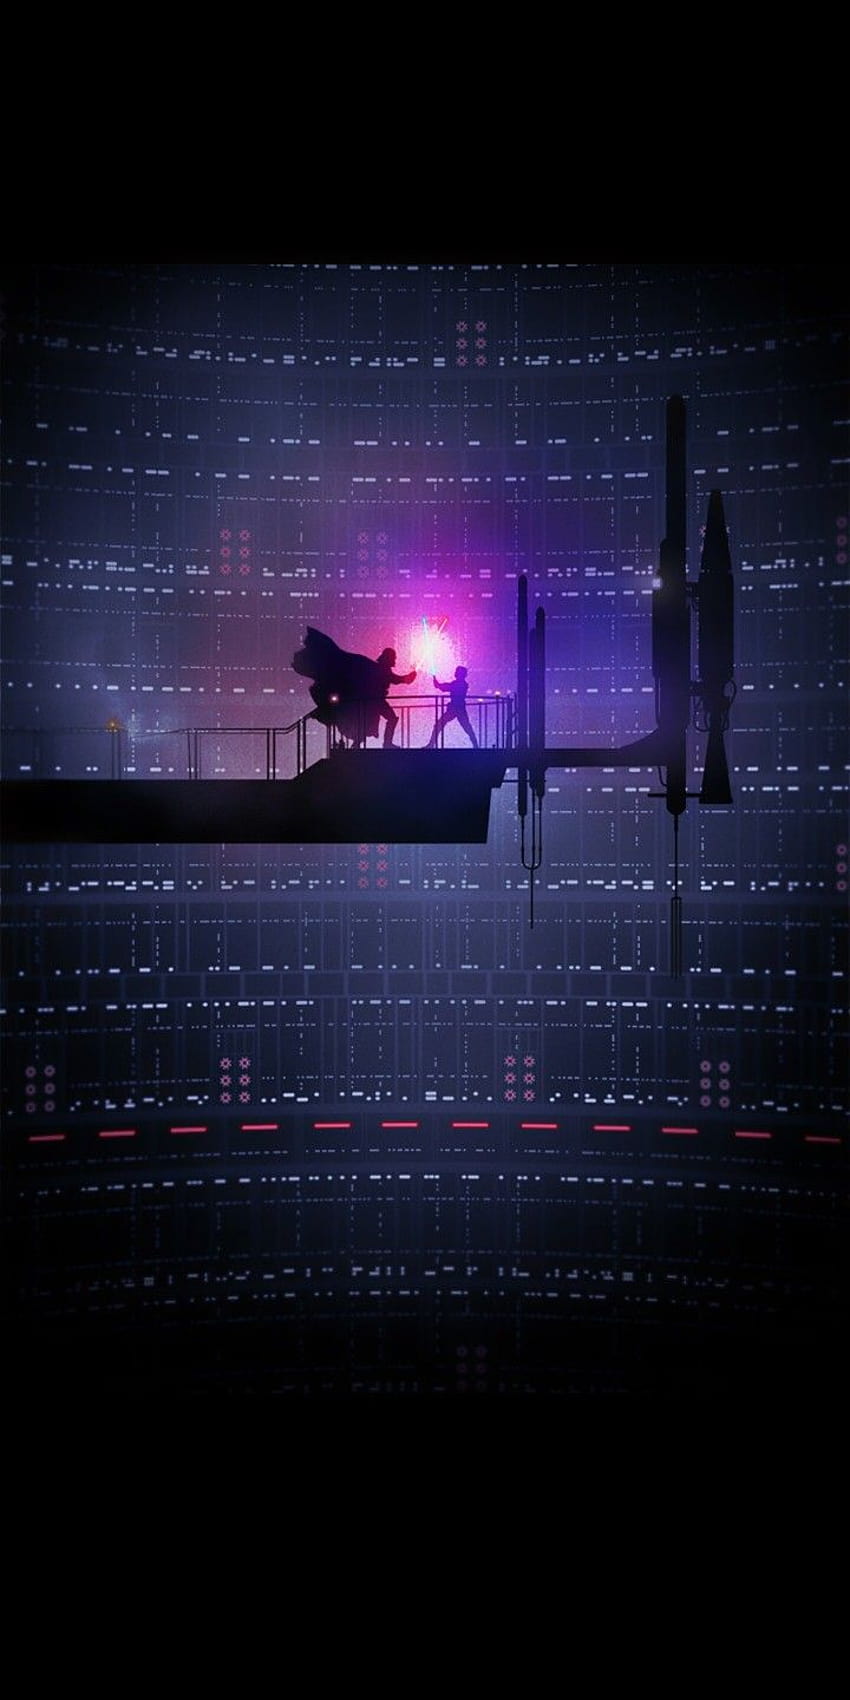 Star Wars ESB Bespin Lightsaber Duel oleh Marco Manev. 18:9. wallpaper ponsel HD